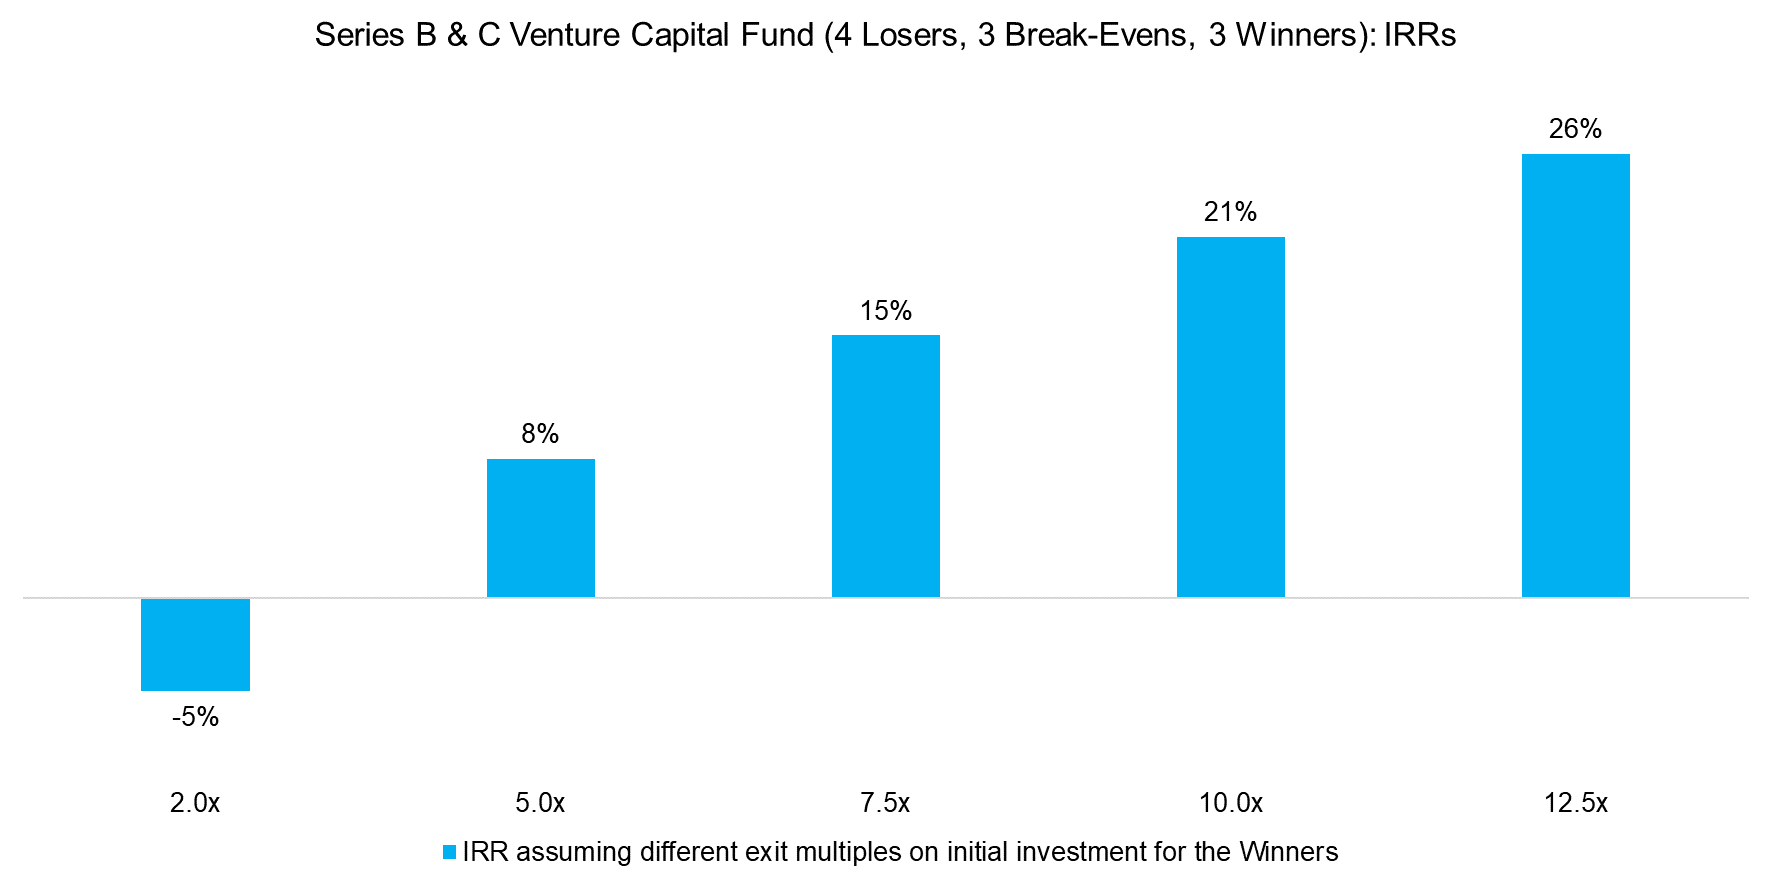 Series B & C Venture Capital Fund (4 Losers, 3 Break-Evens, 3 Winners) IRRs